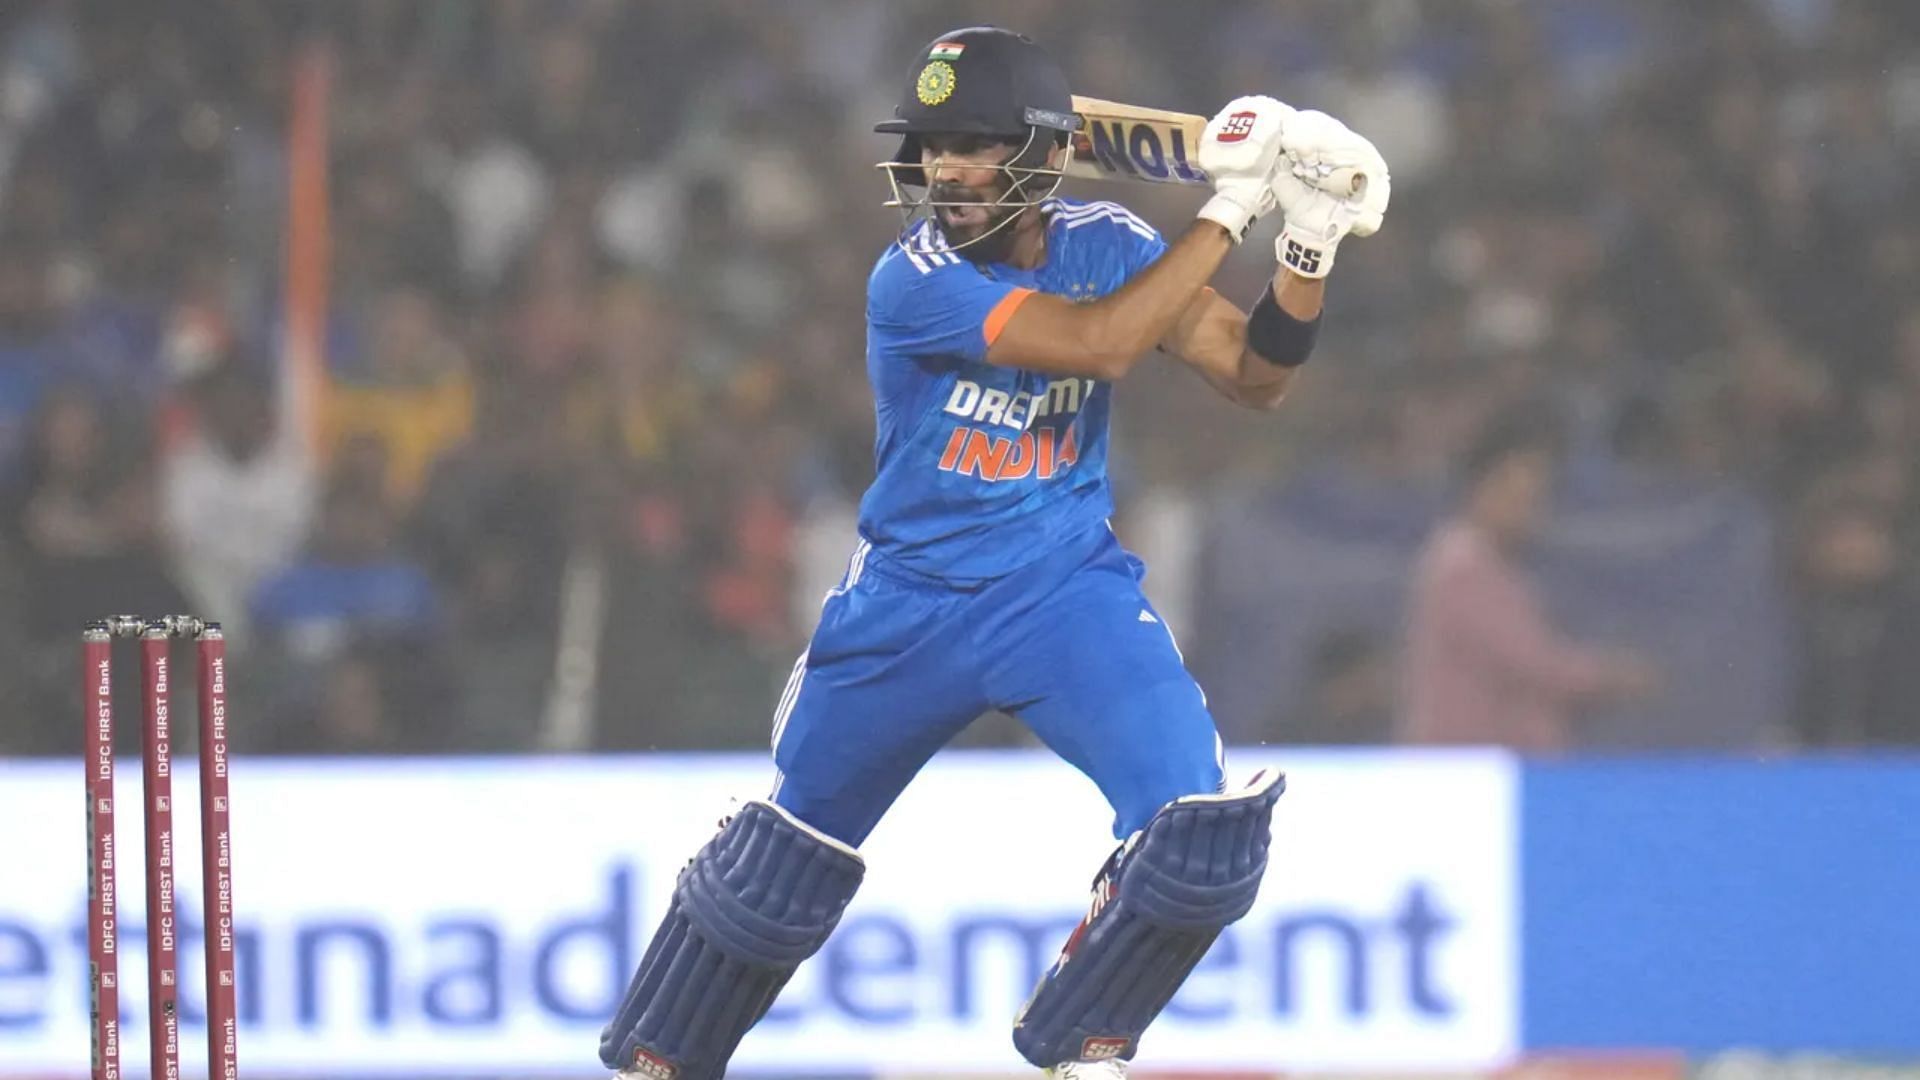 Ruturaj Gaikwad scored a brilliant hundred against Australia in the T20I series last year